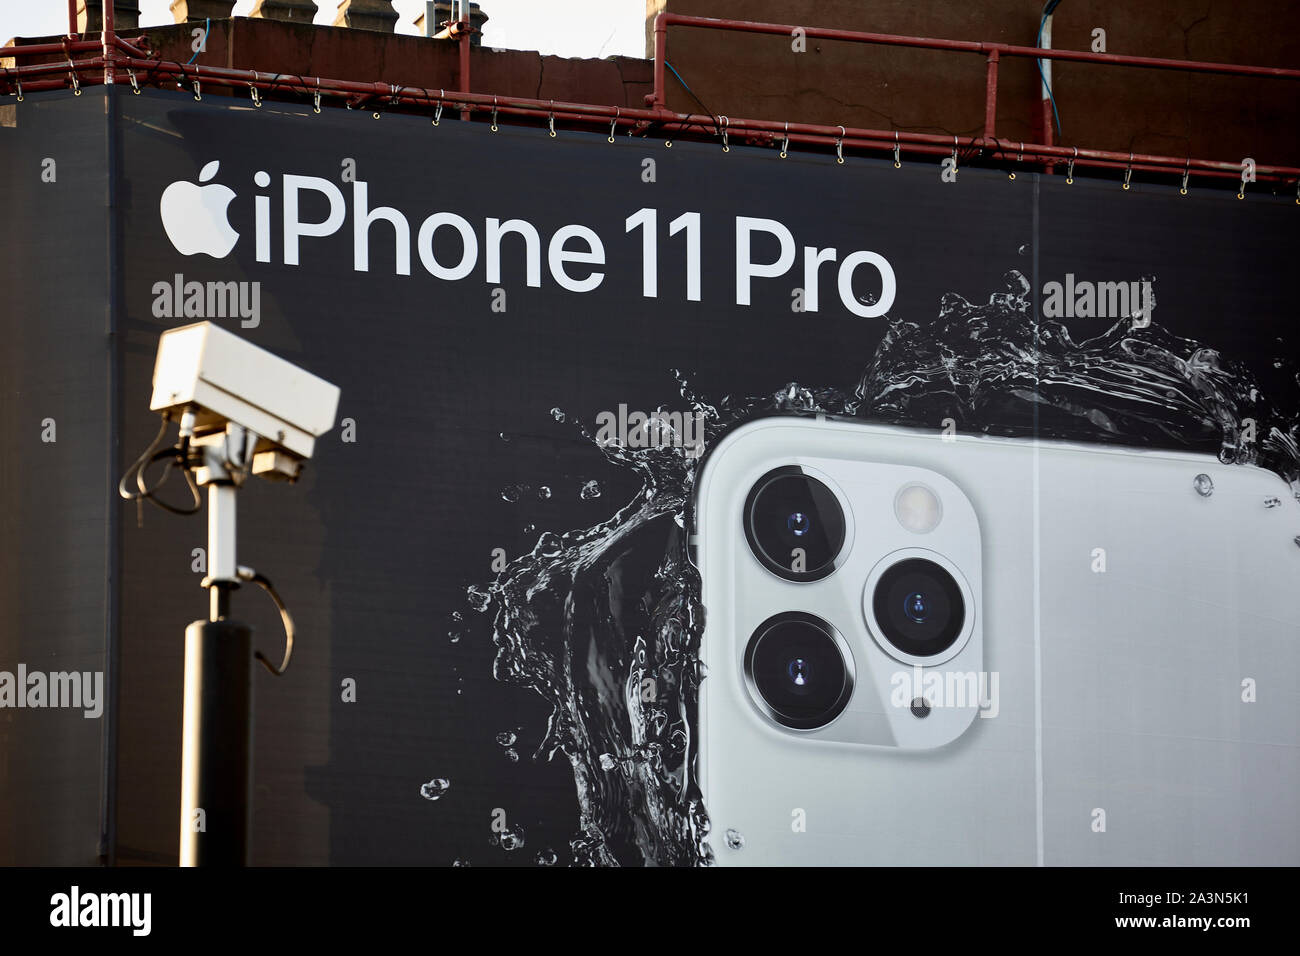 Apple IPhone 11 Pro Billboard in London Stock Photo